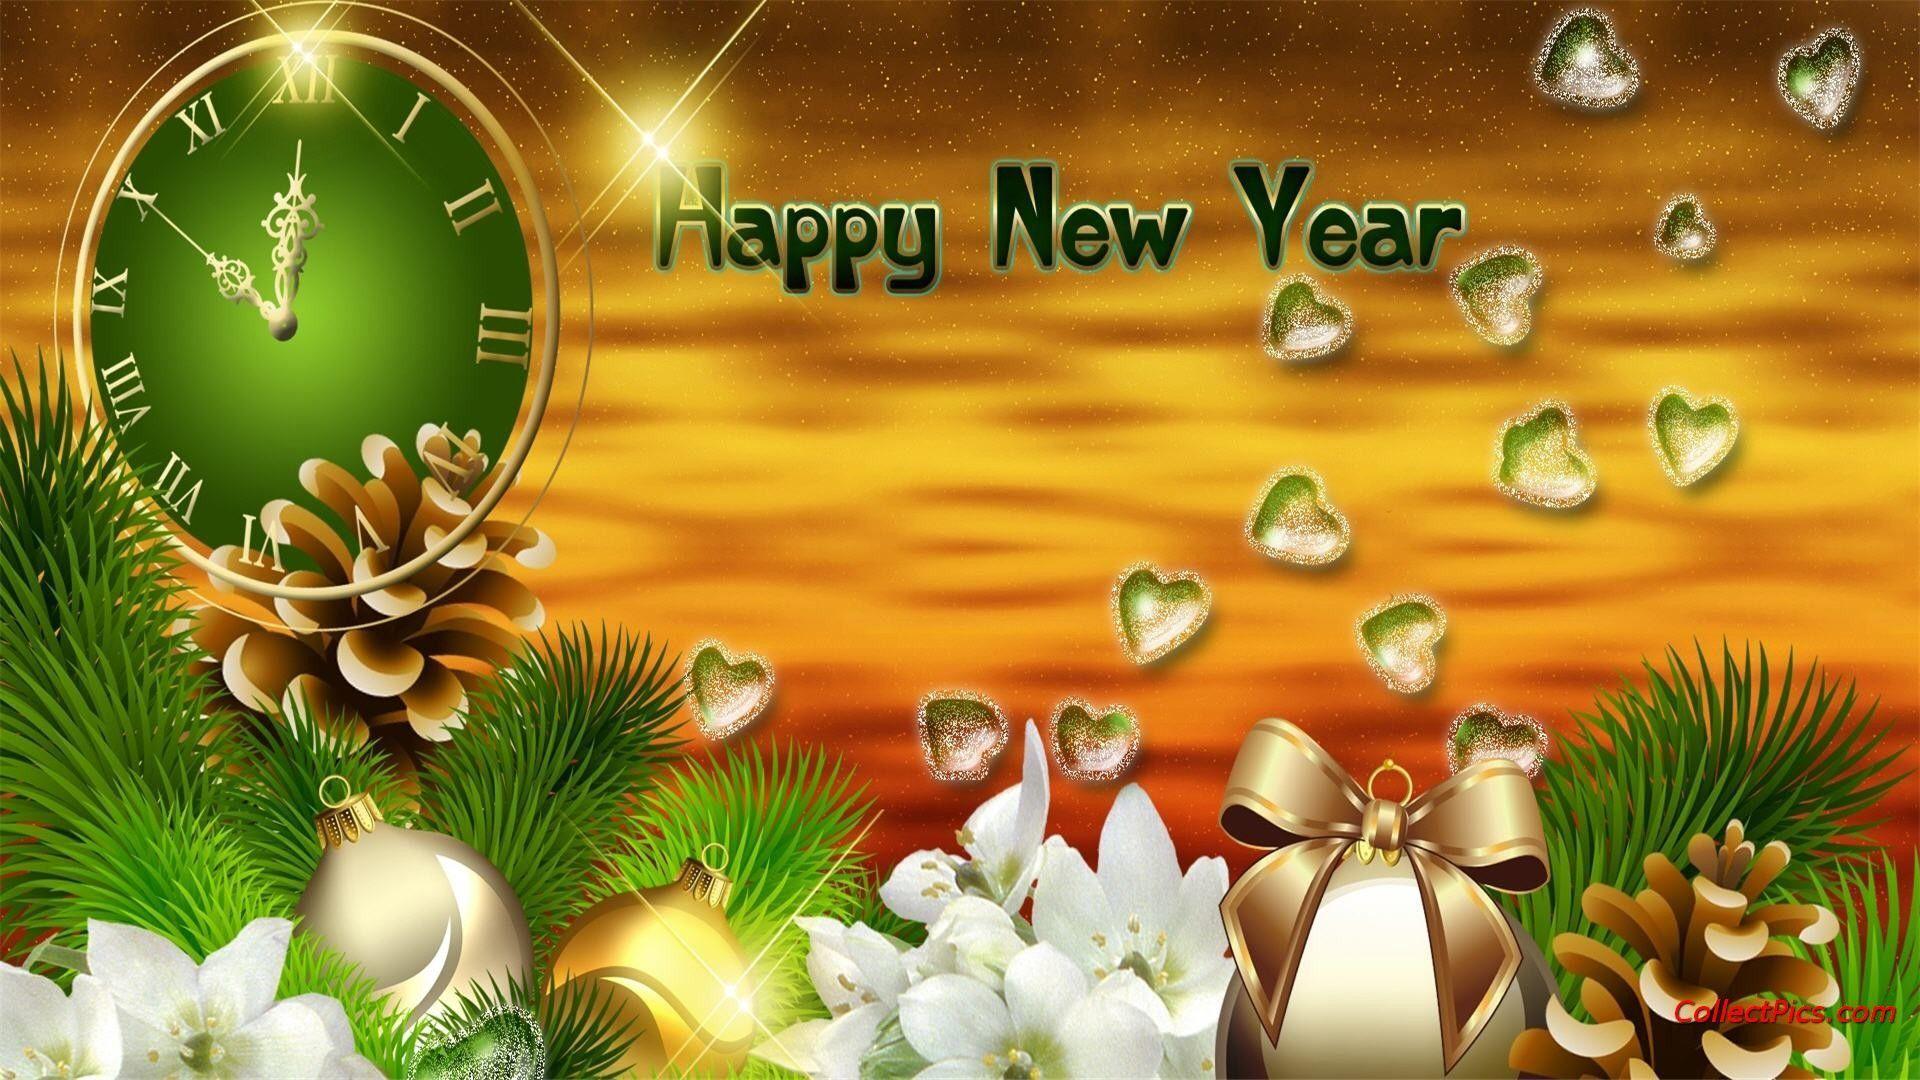 Happy New Year Gif Wallpaper New Year 2015